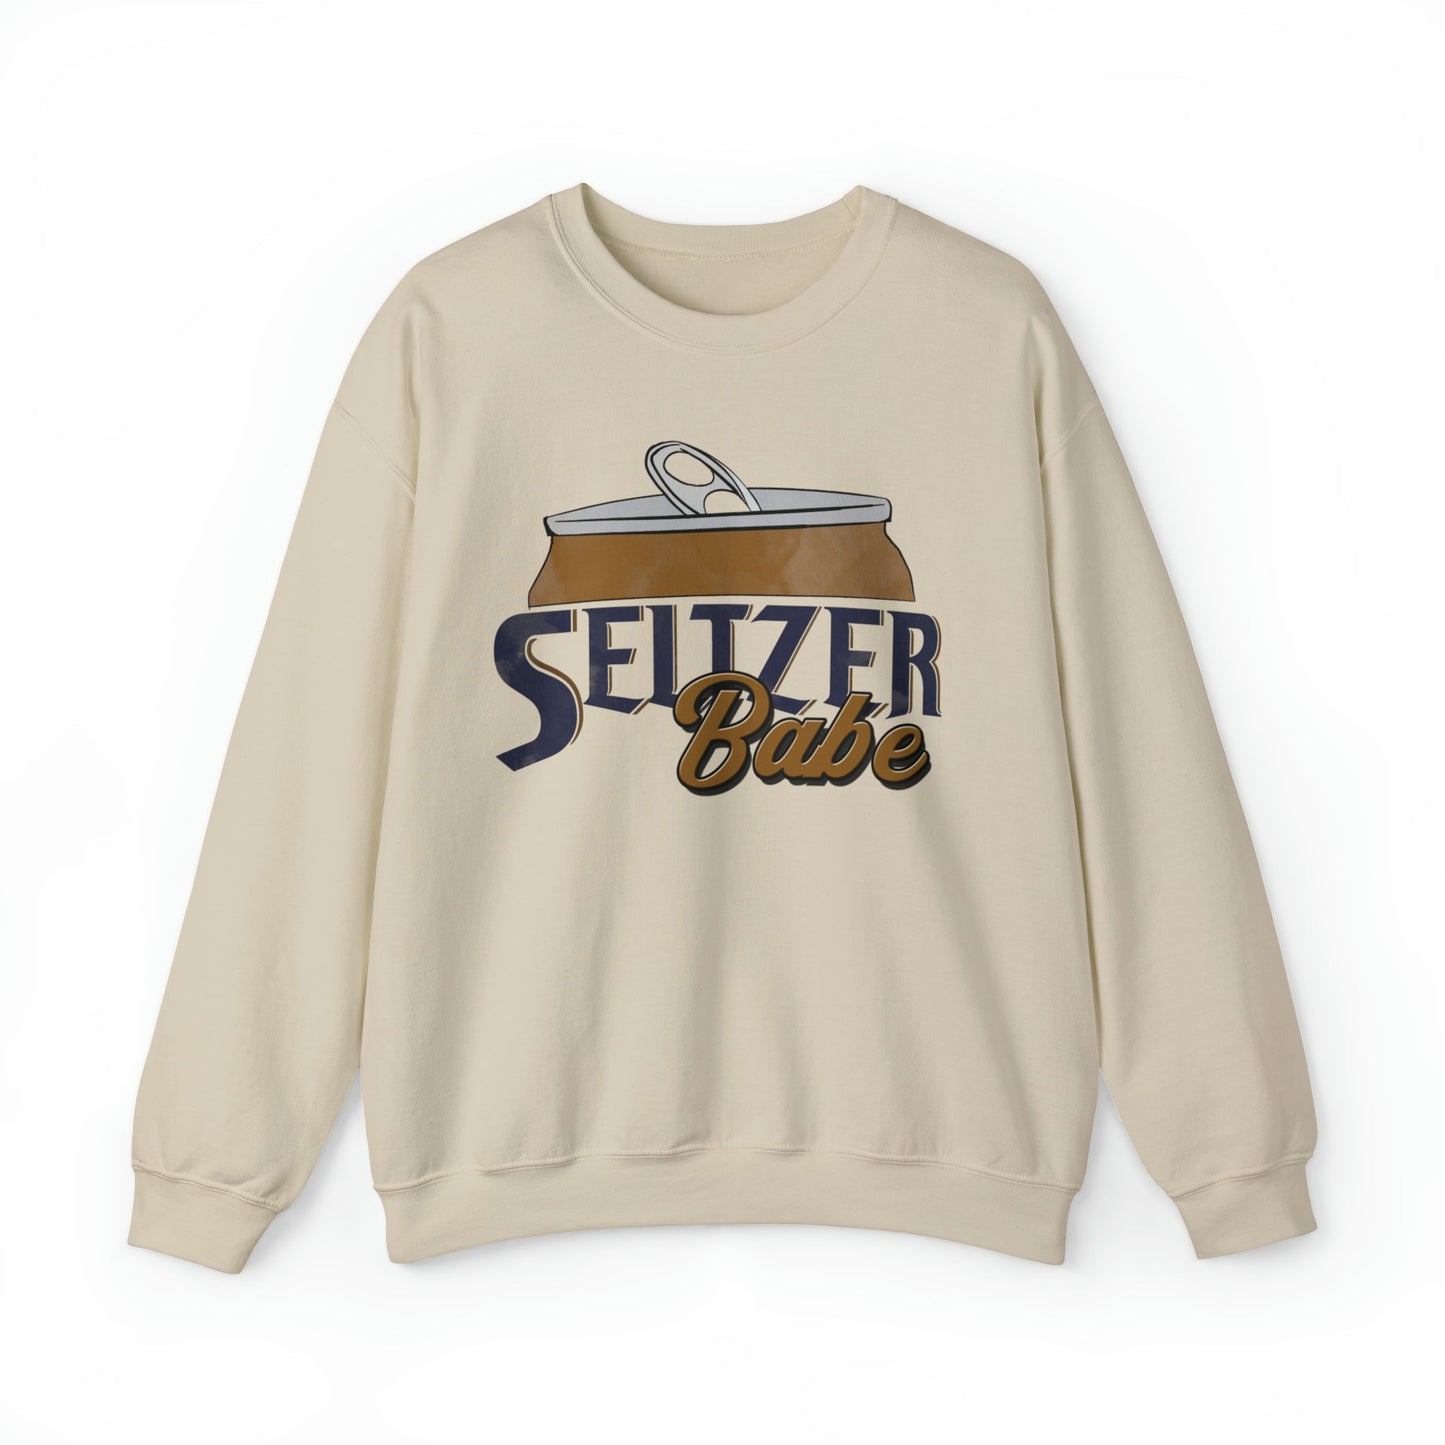 Seltzer Babe Sweatshirt